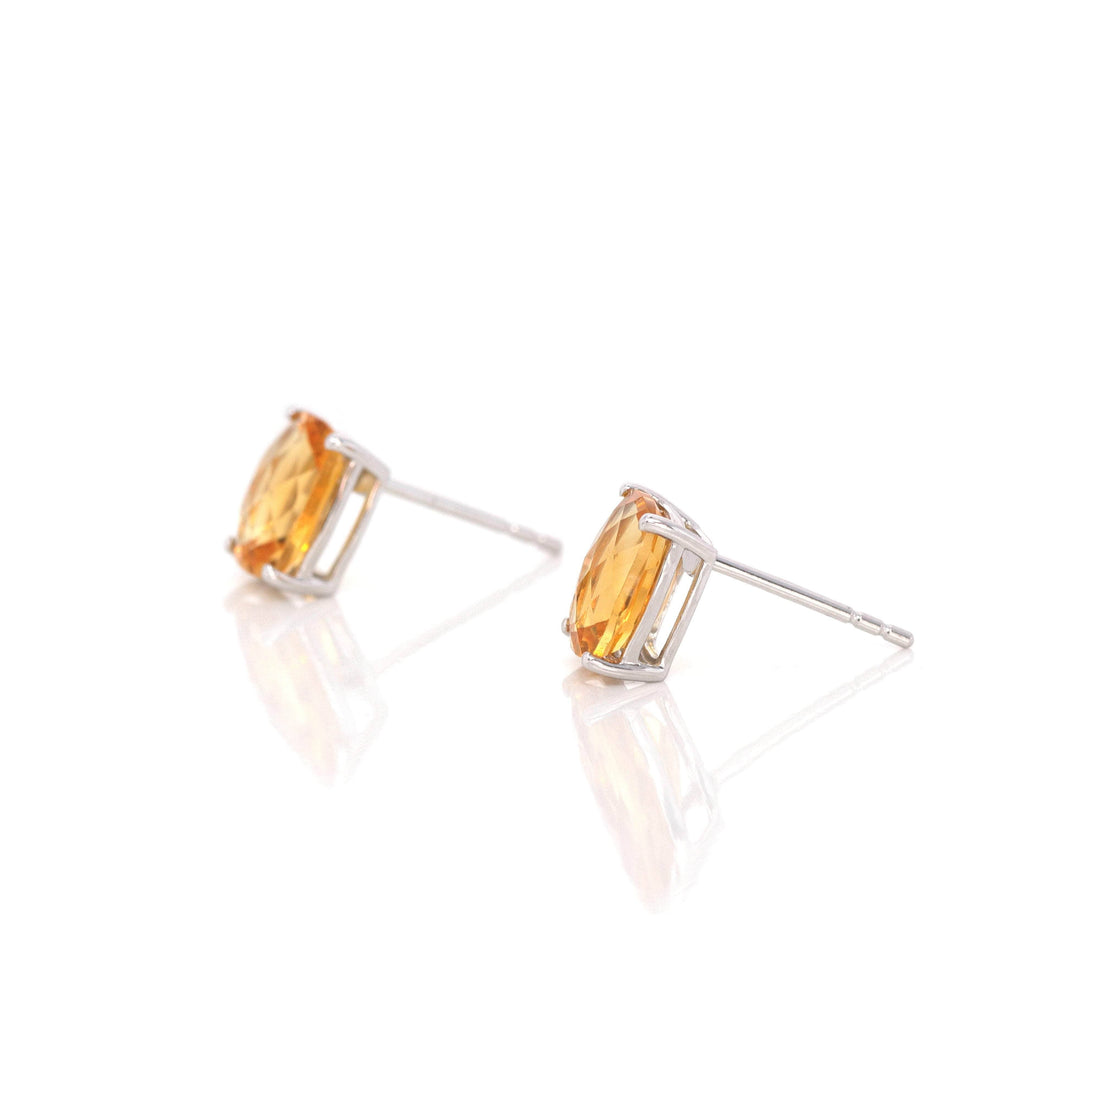 Baikalla Jewelry Gold Gemstone Earrings Baikalla 14k Classic White Gold Natural 6*8mm Emerald Cushion Cut Citrine Earrings